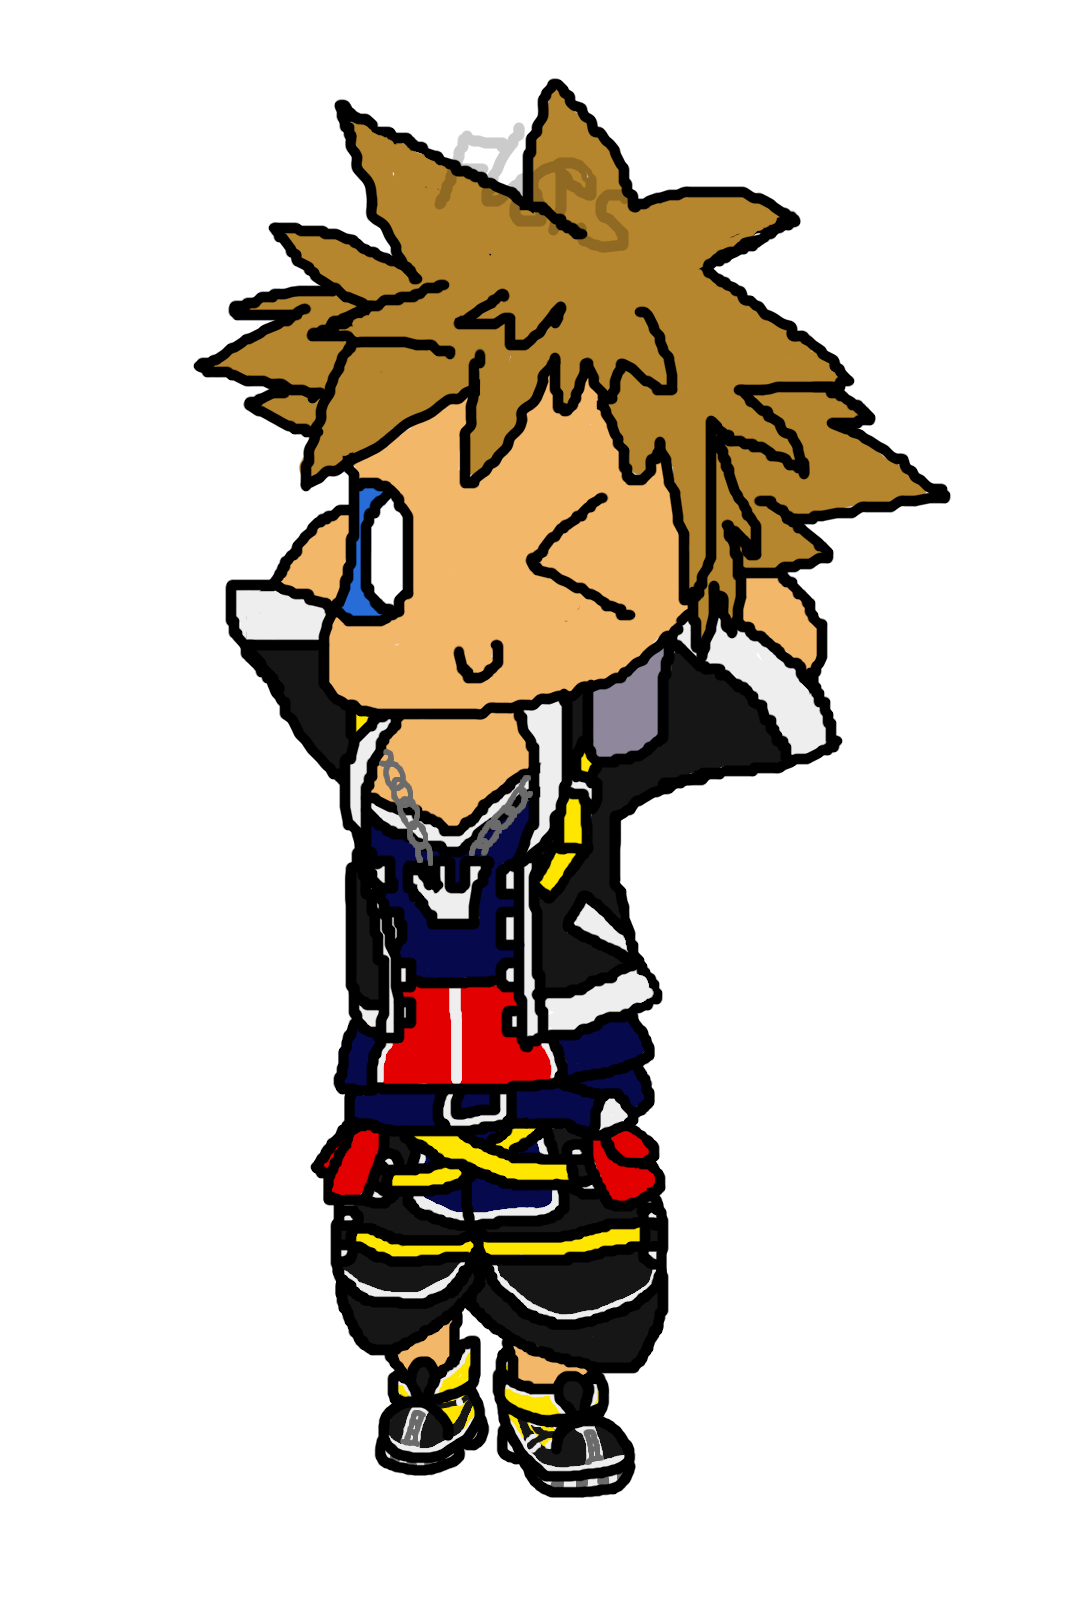 Sora Kingdom Hearts 2 Outfit Fanart by Kuby